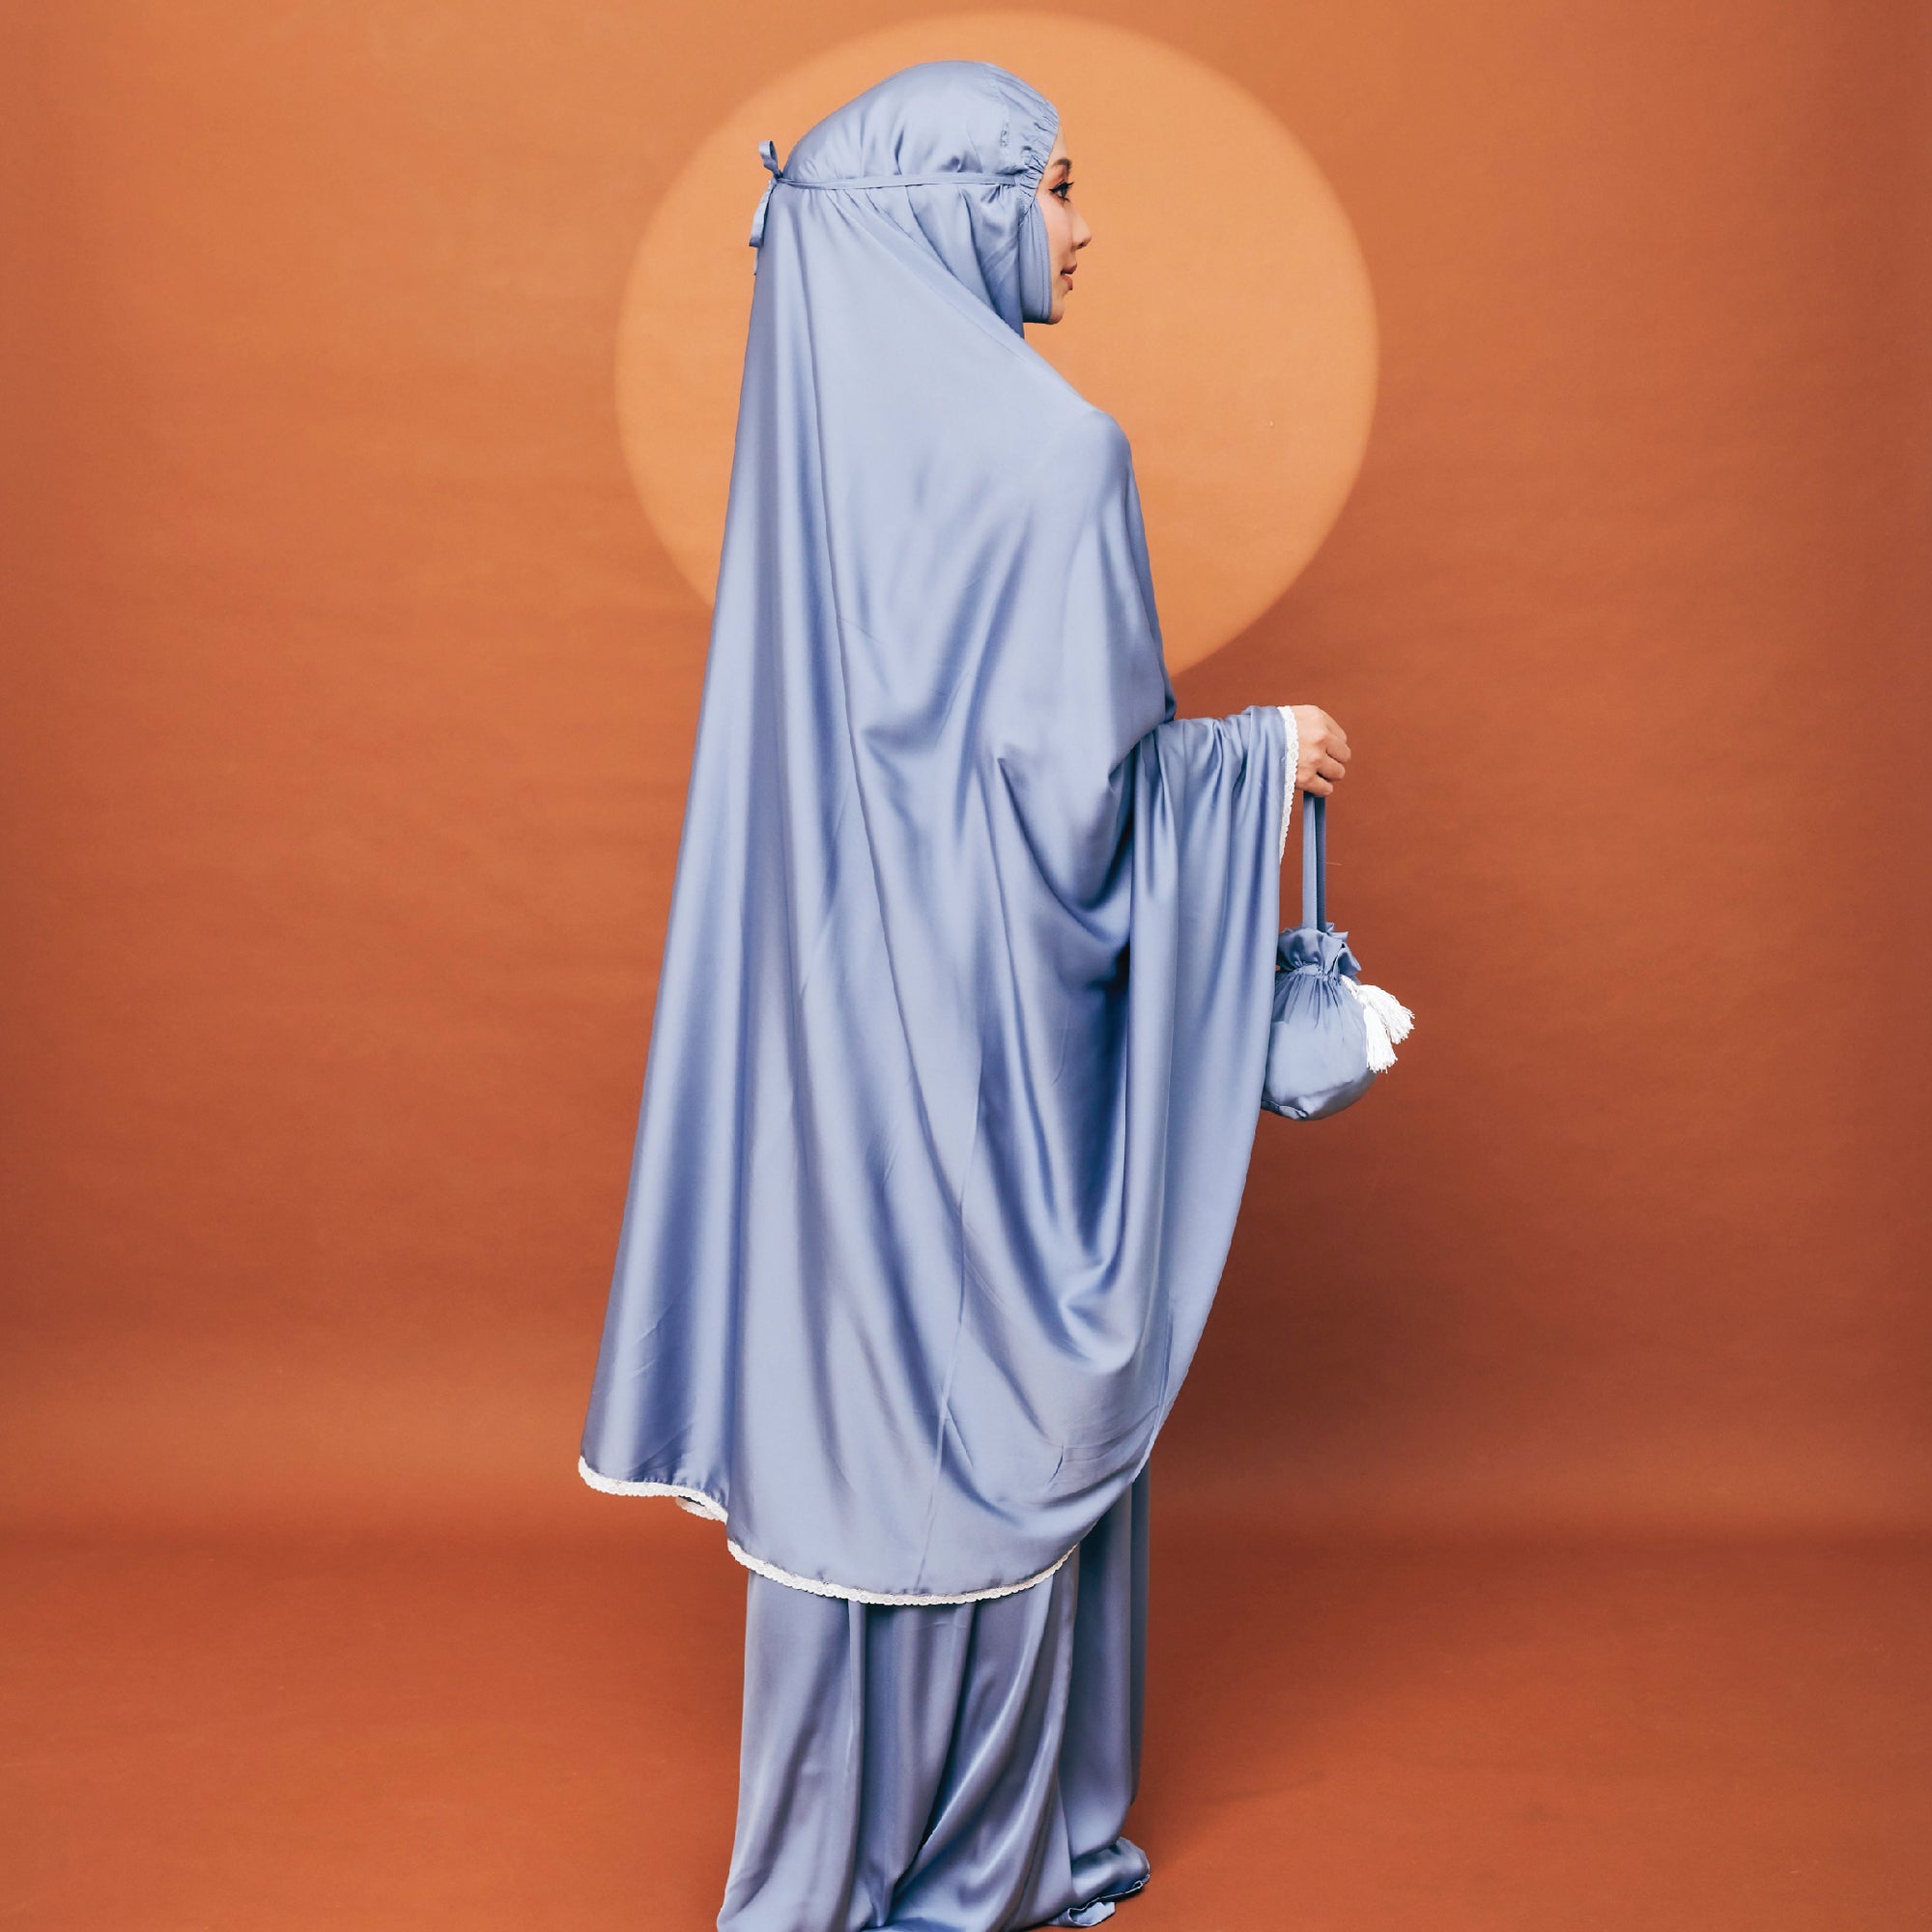 Khadeeja Sateen Prayerwear in Blueberry - Telekung Satin